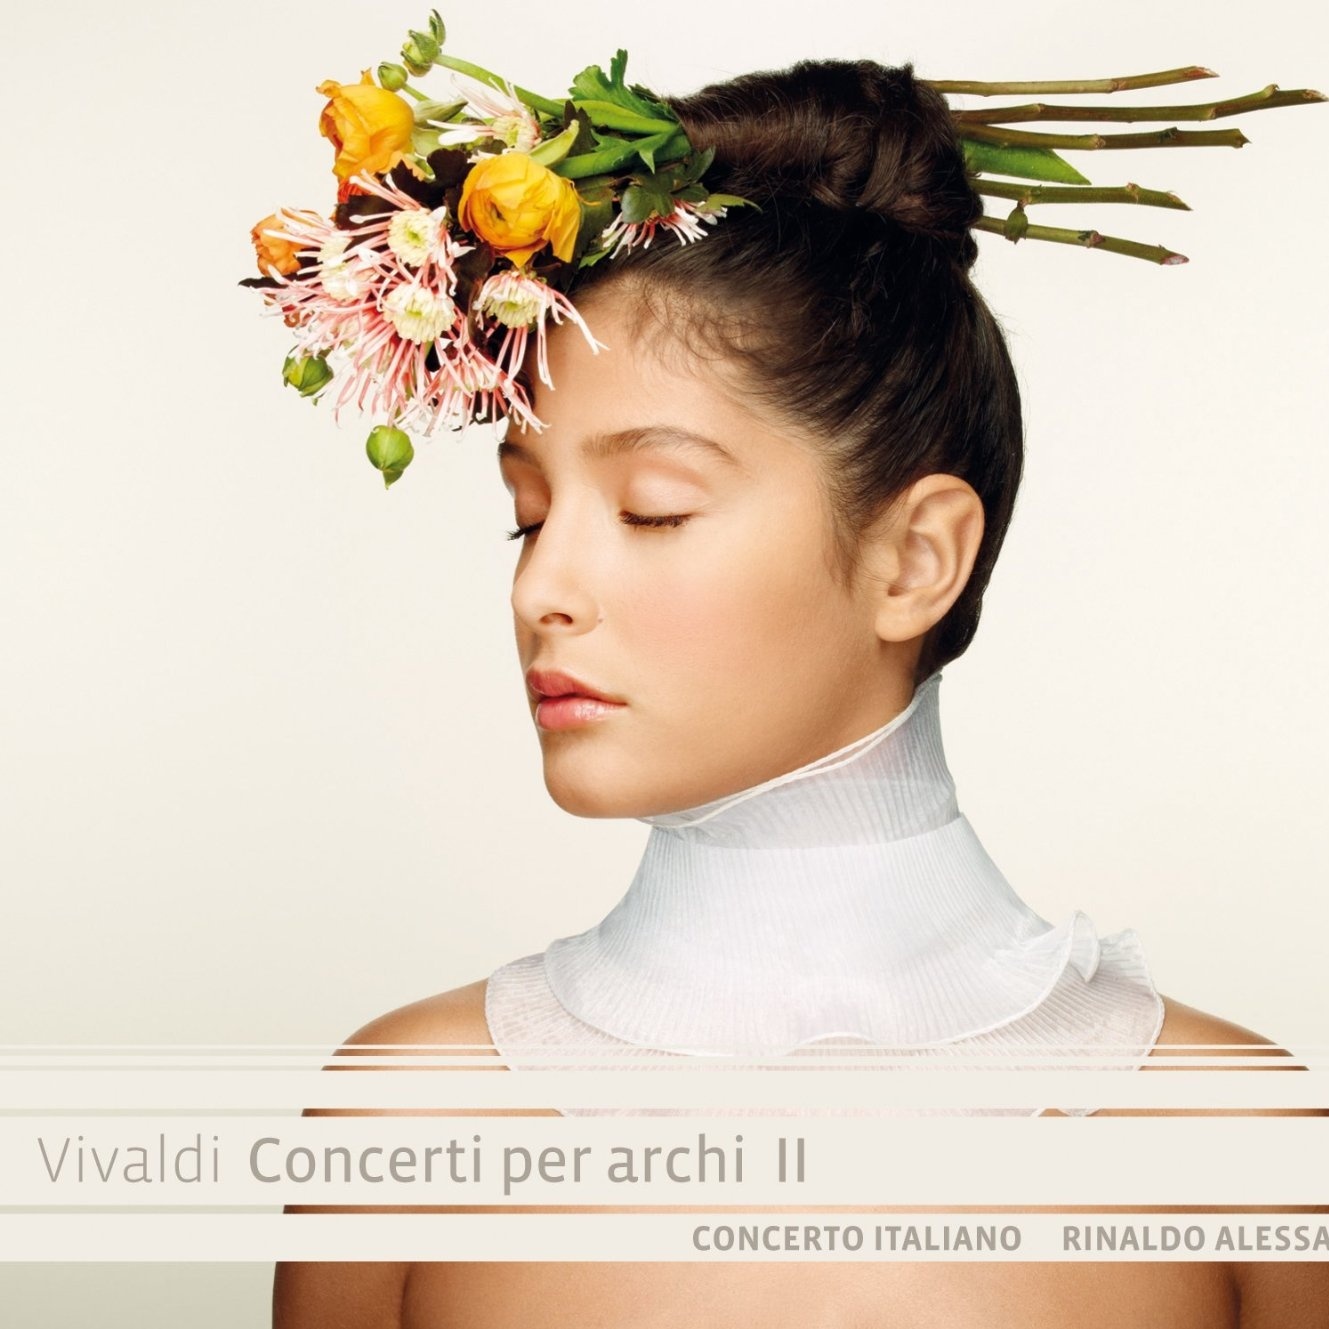 Antonio Vivaldi: Concerto in G Major, RV 150 - III. Allegro